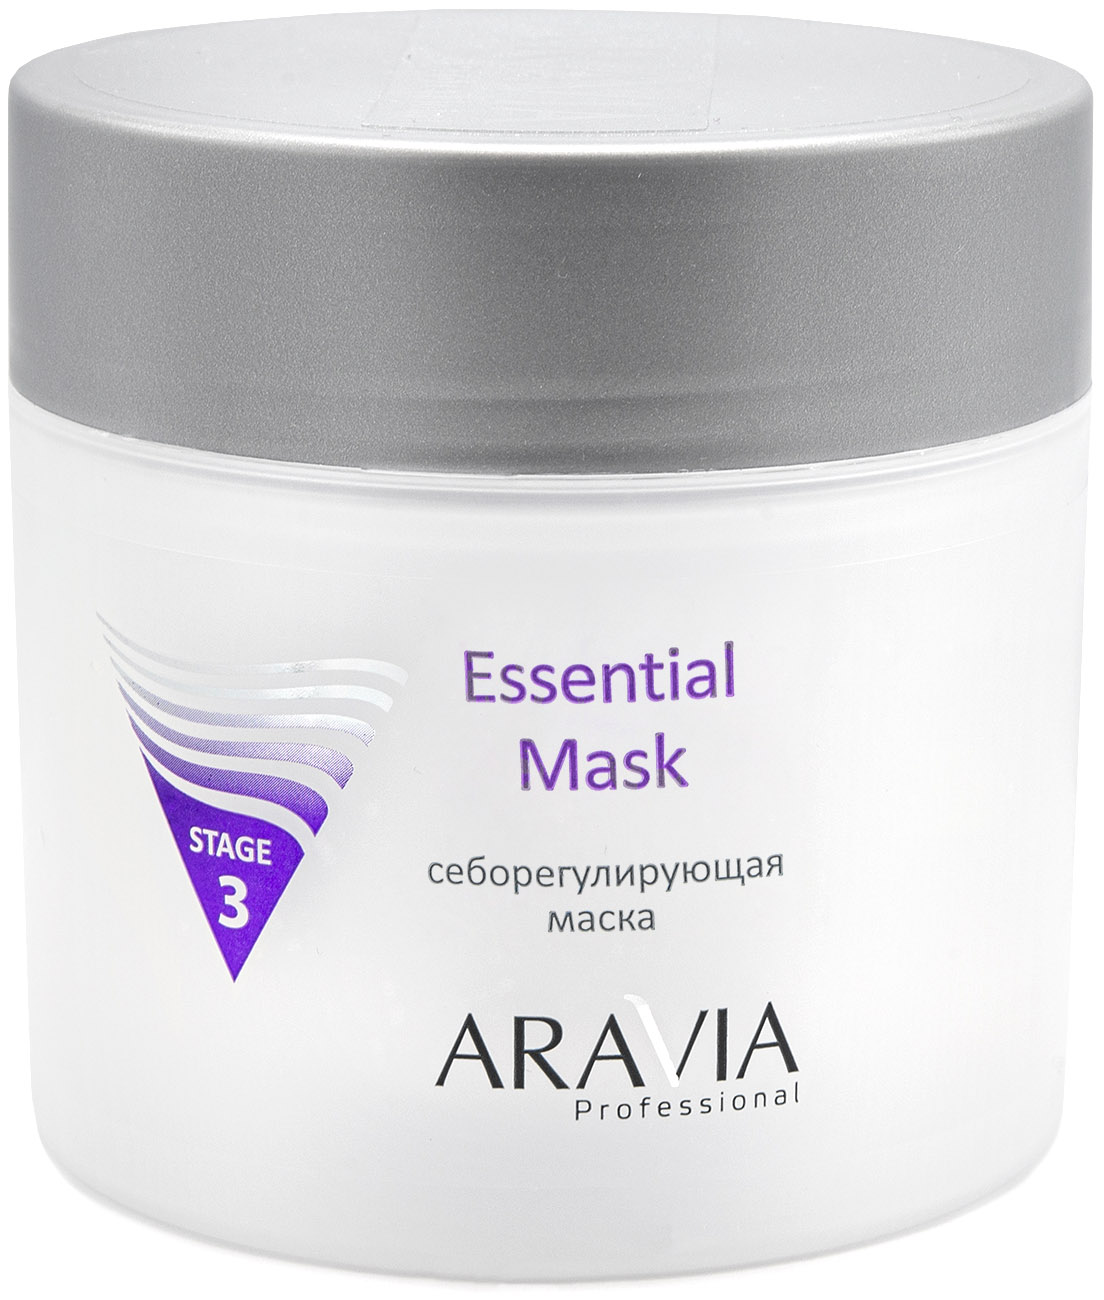 Aravia Professional Маска себорегулирующая Essential Mask, 3